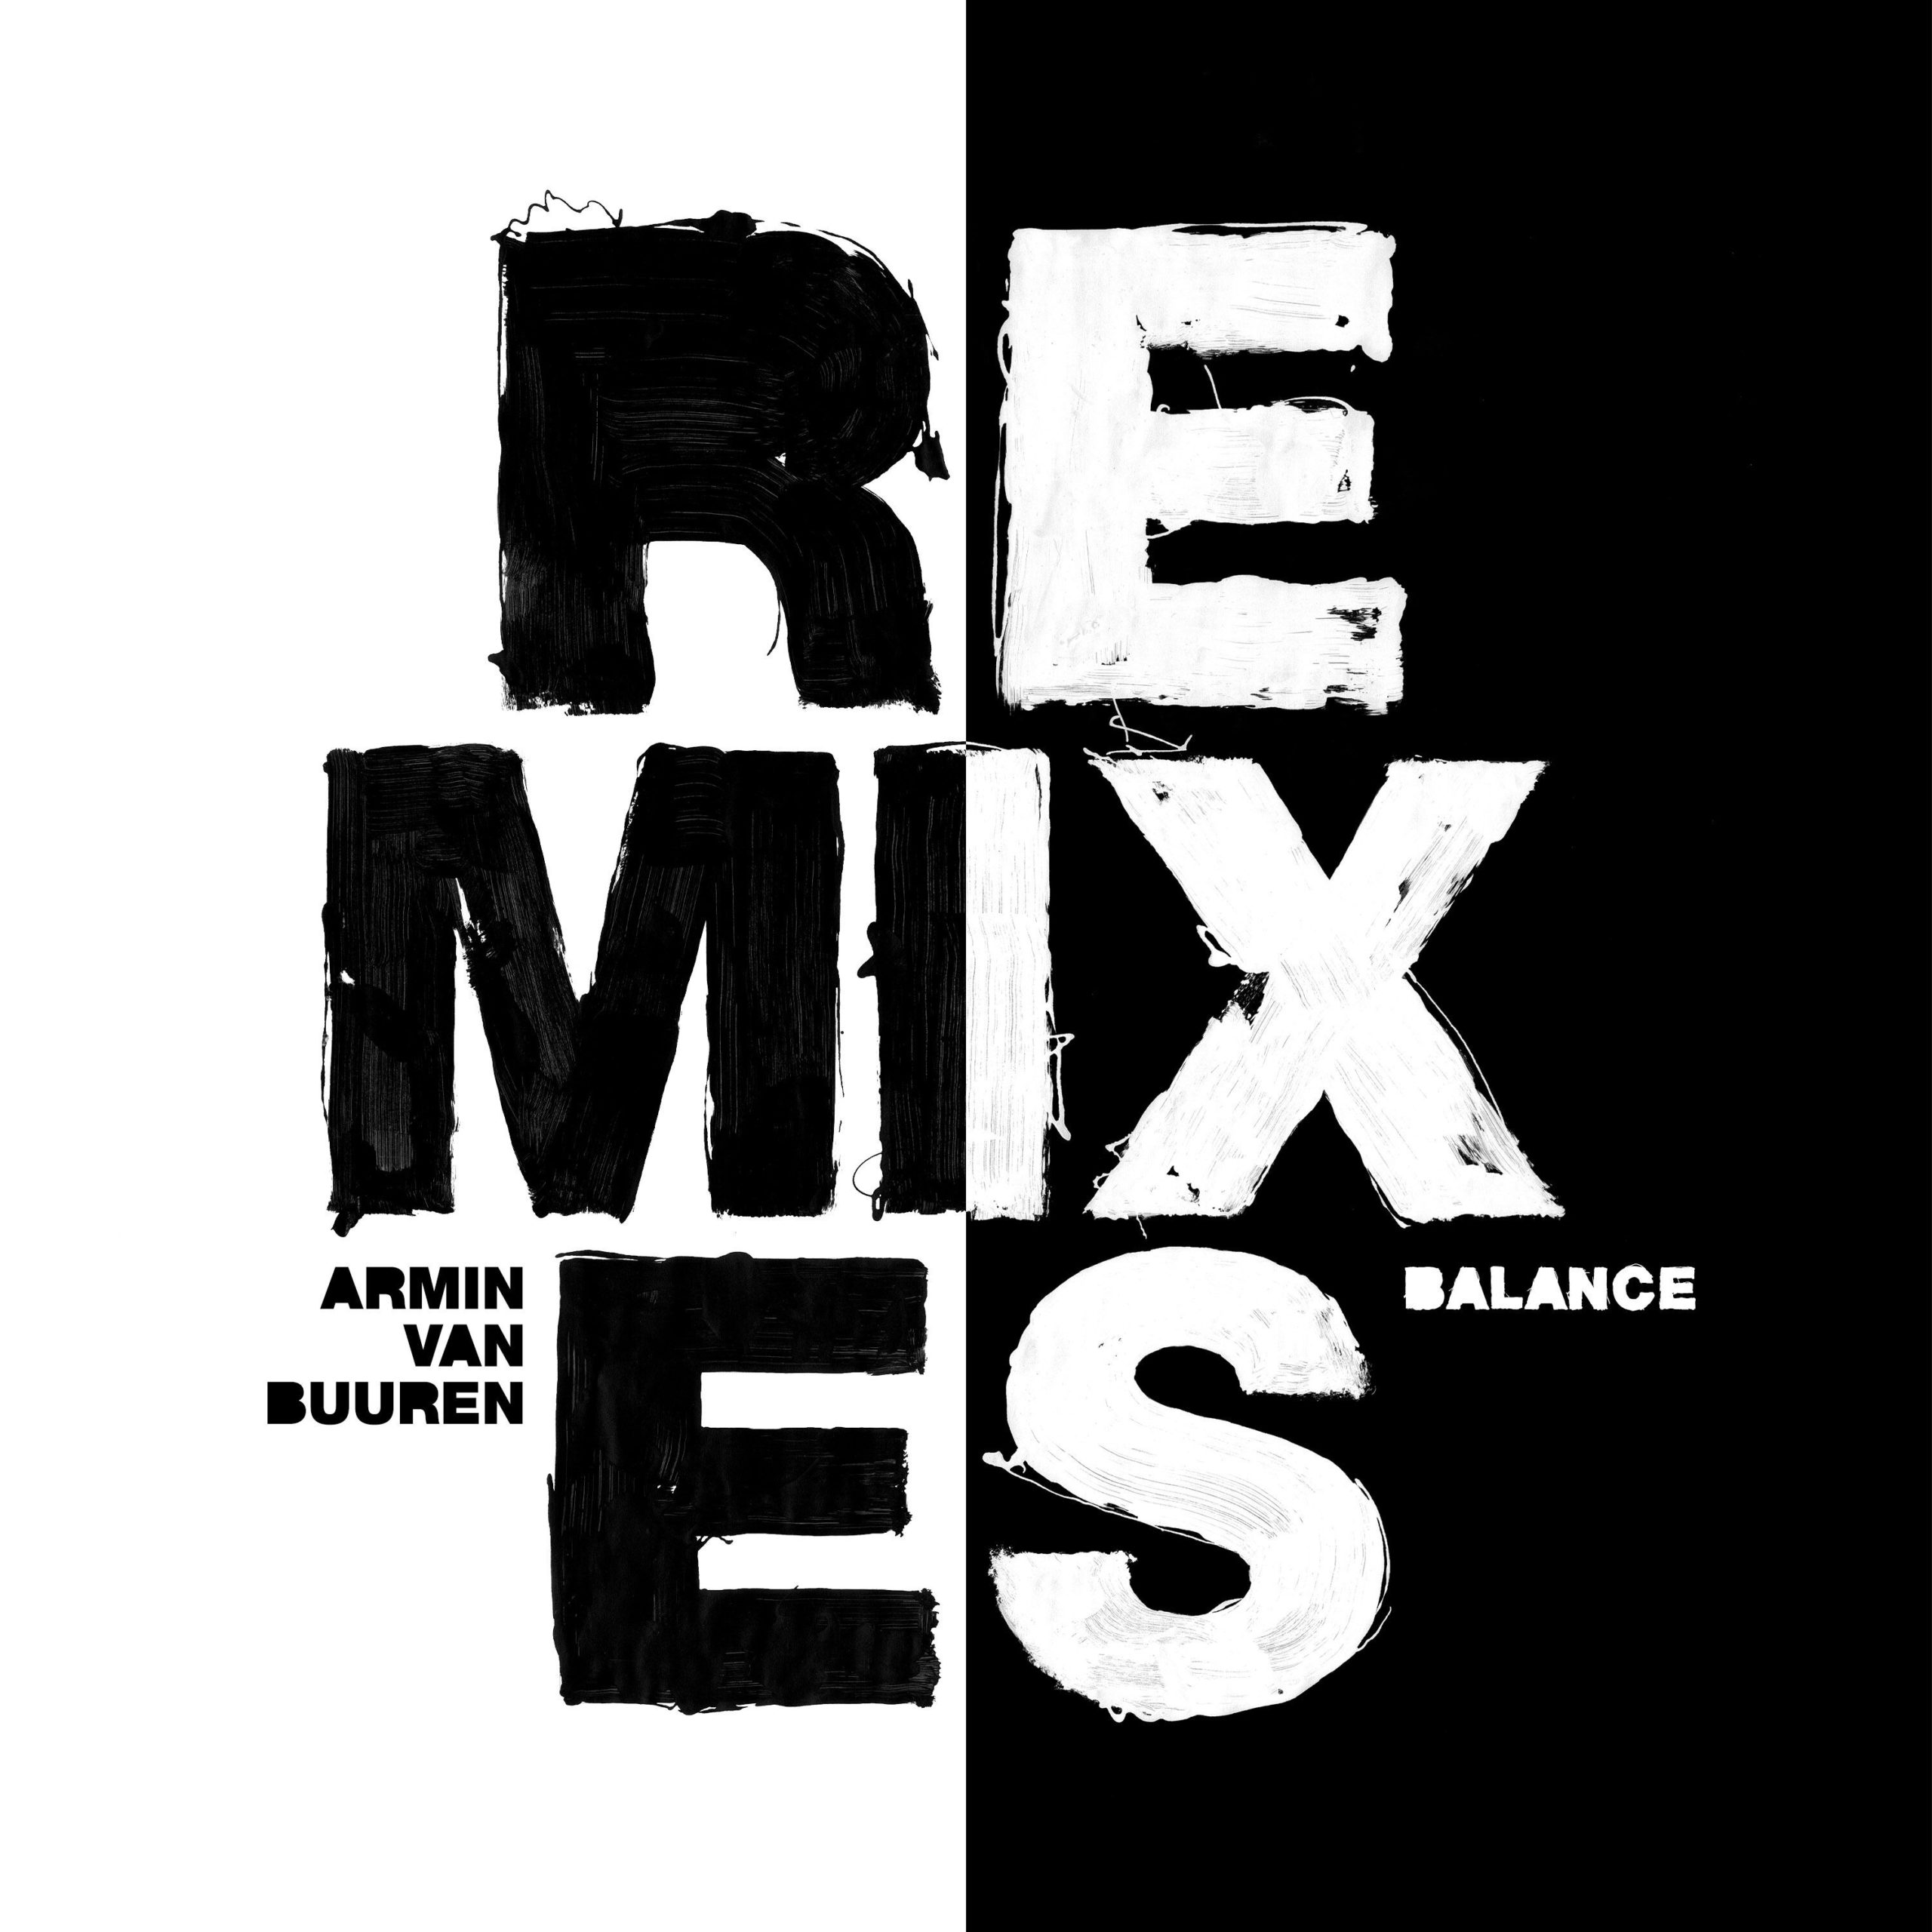 Armin van Buuren presents Balance (Remixes) on Armada Music